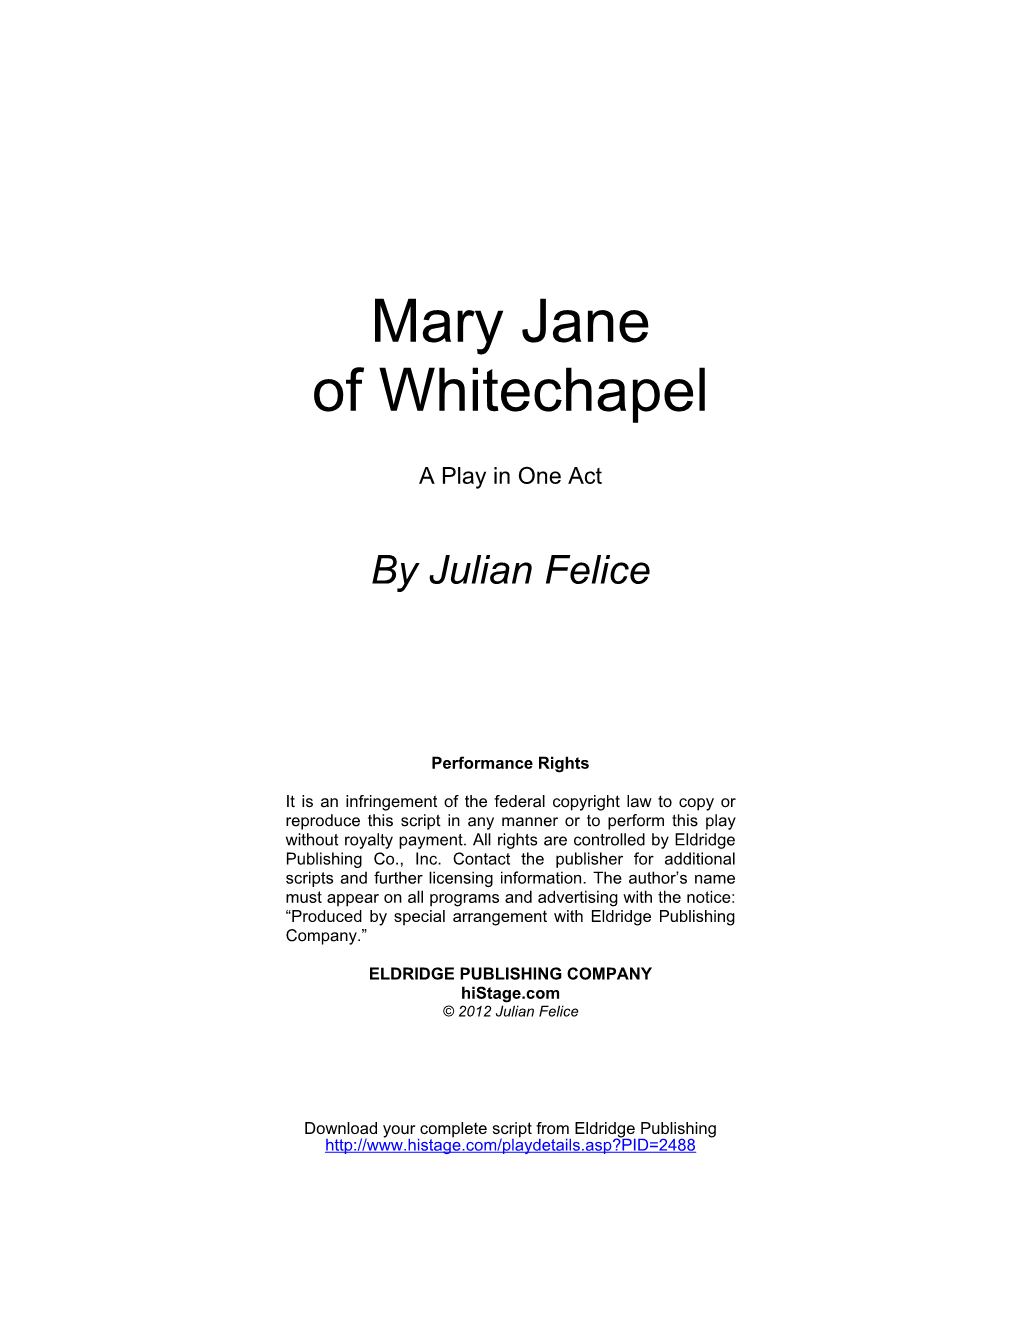 Mary Jane of Whitechapel